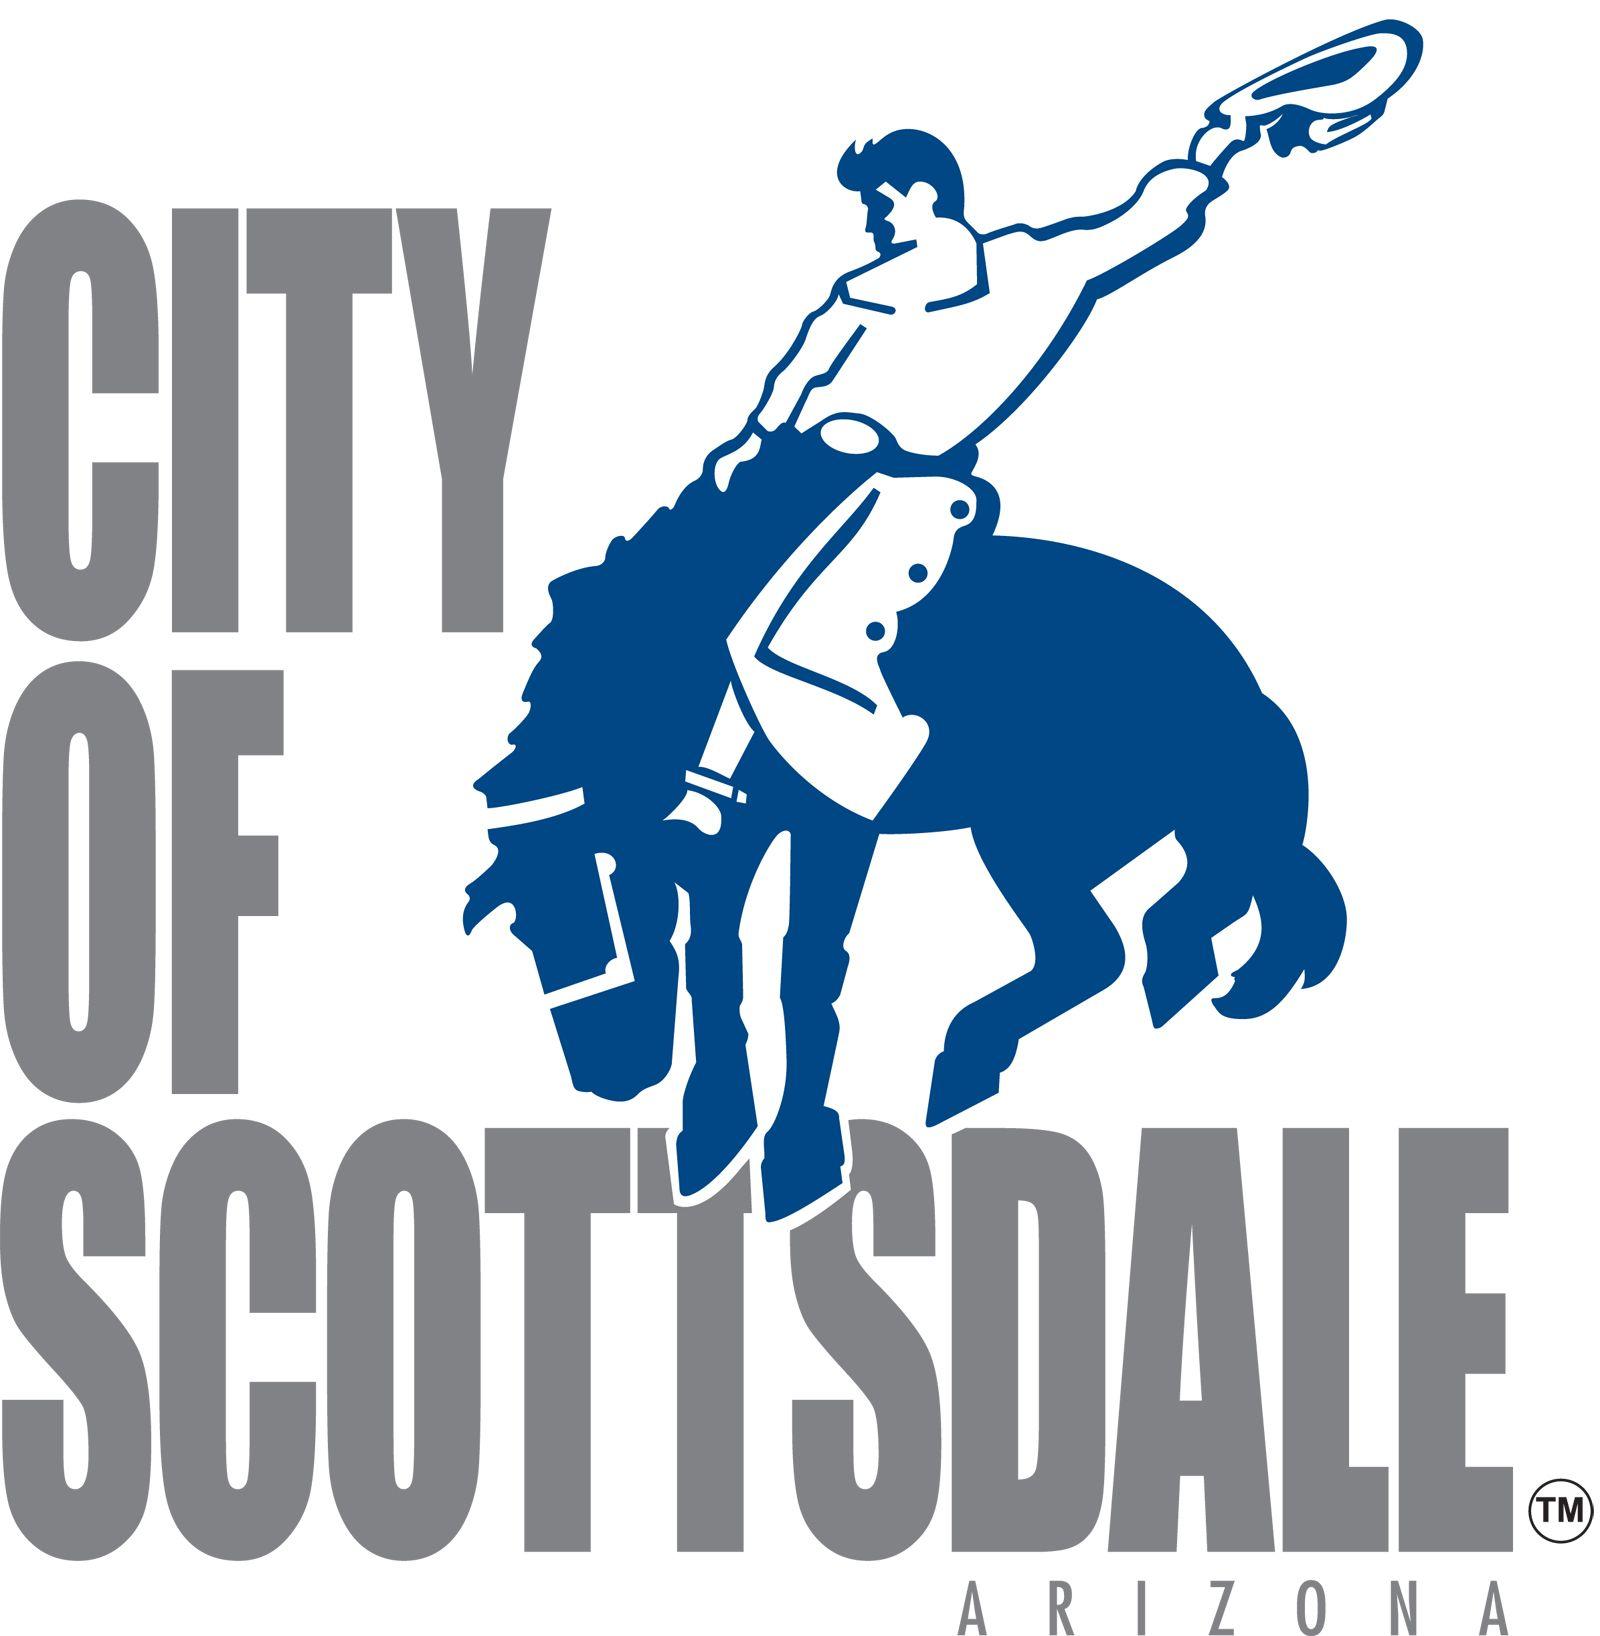 Scottsdale Logo - City of Scottsdale Logo with Horse and Rider - Scottsdale Ranch ...